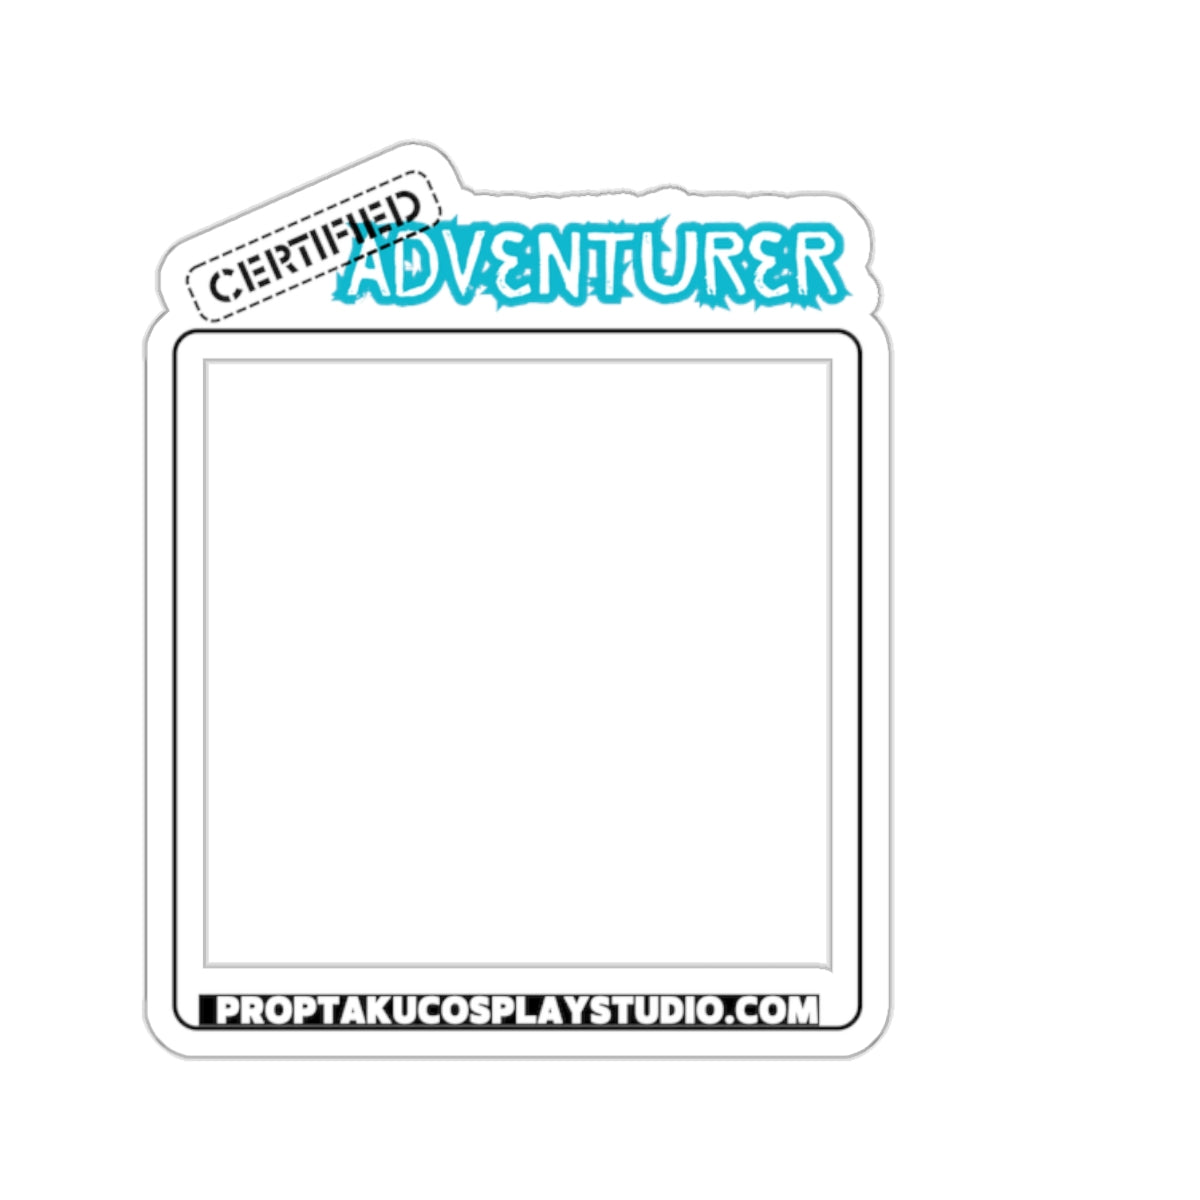 Certified Adventurer Kiss-Cut Photo Sticker (square)